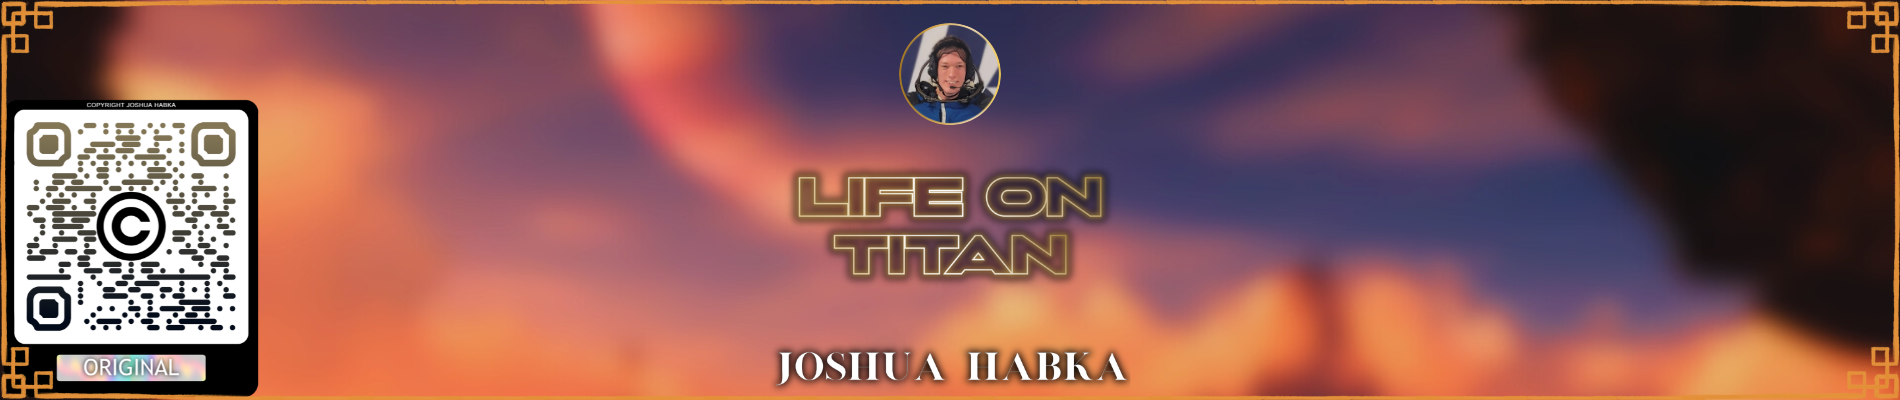 Exploring the Potential for Life on Titan?—?Josh Habka